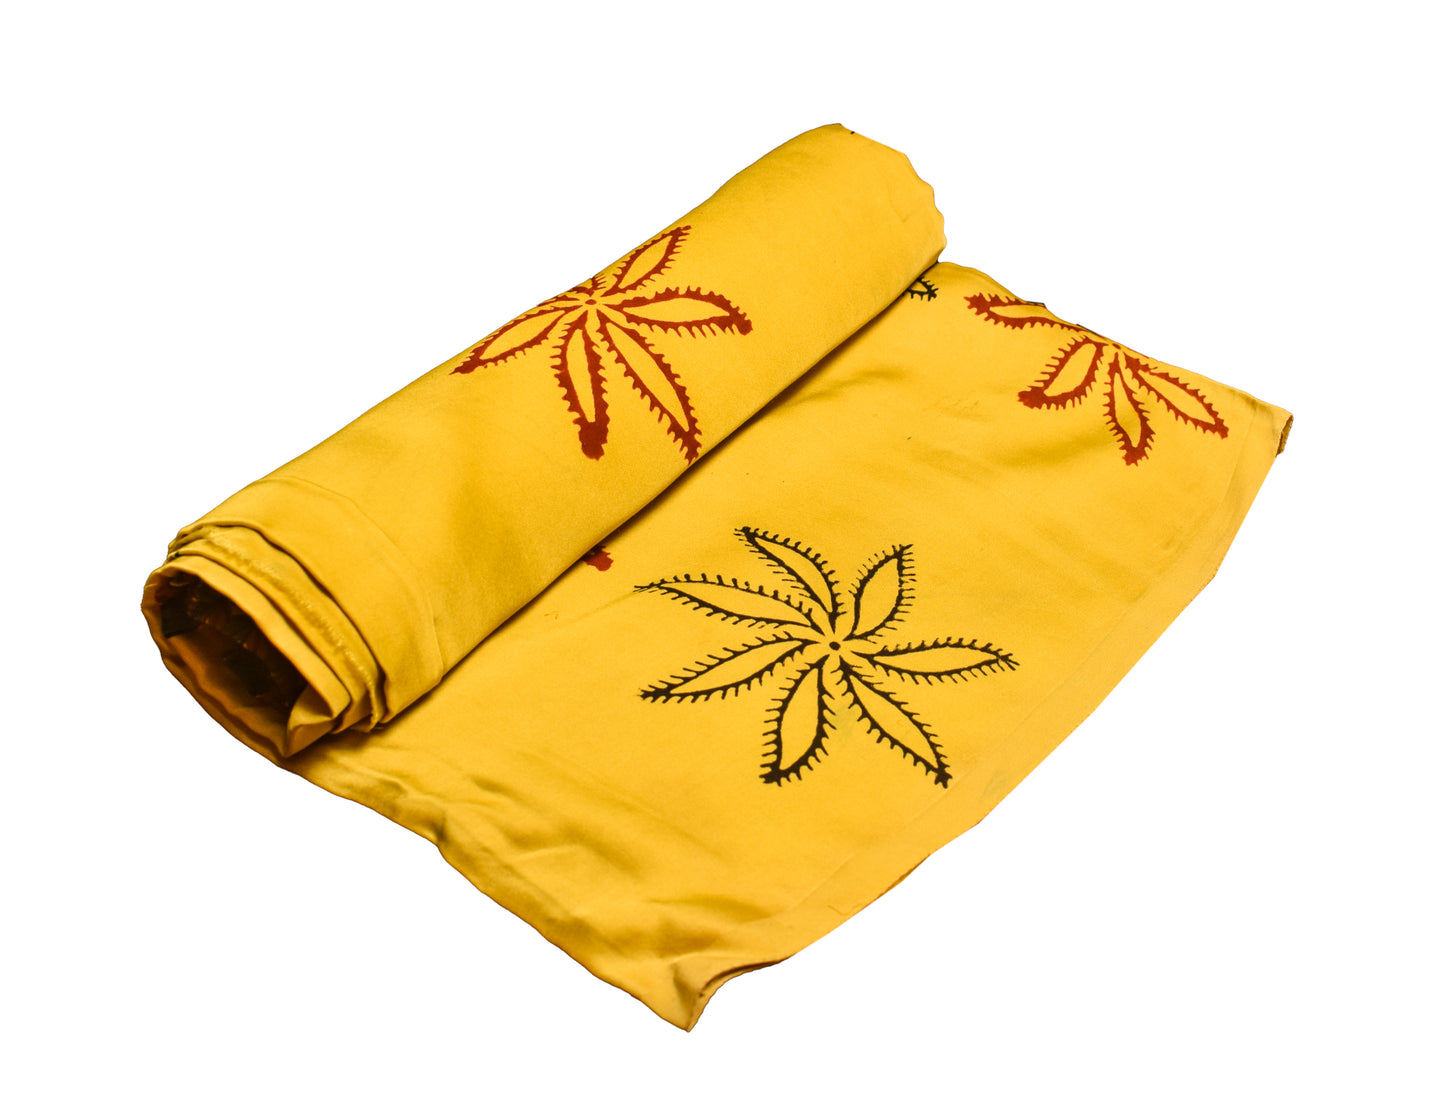 Ajrakh Modal Silk Natural Dye Hand Block Print Fabric    2.5 Mtr  Length  -  SKU : ID21902L